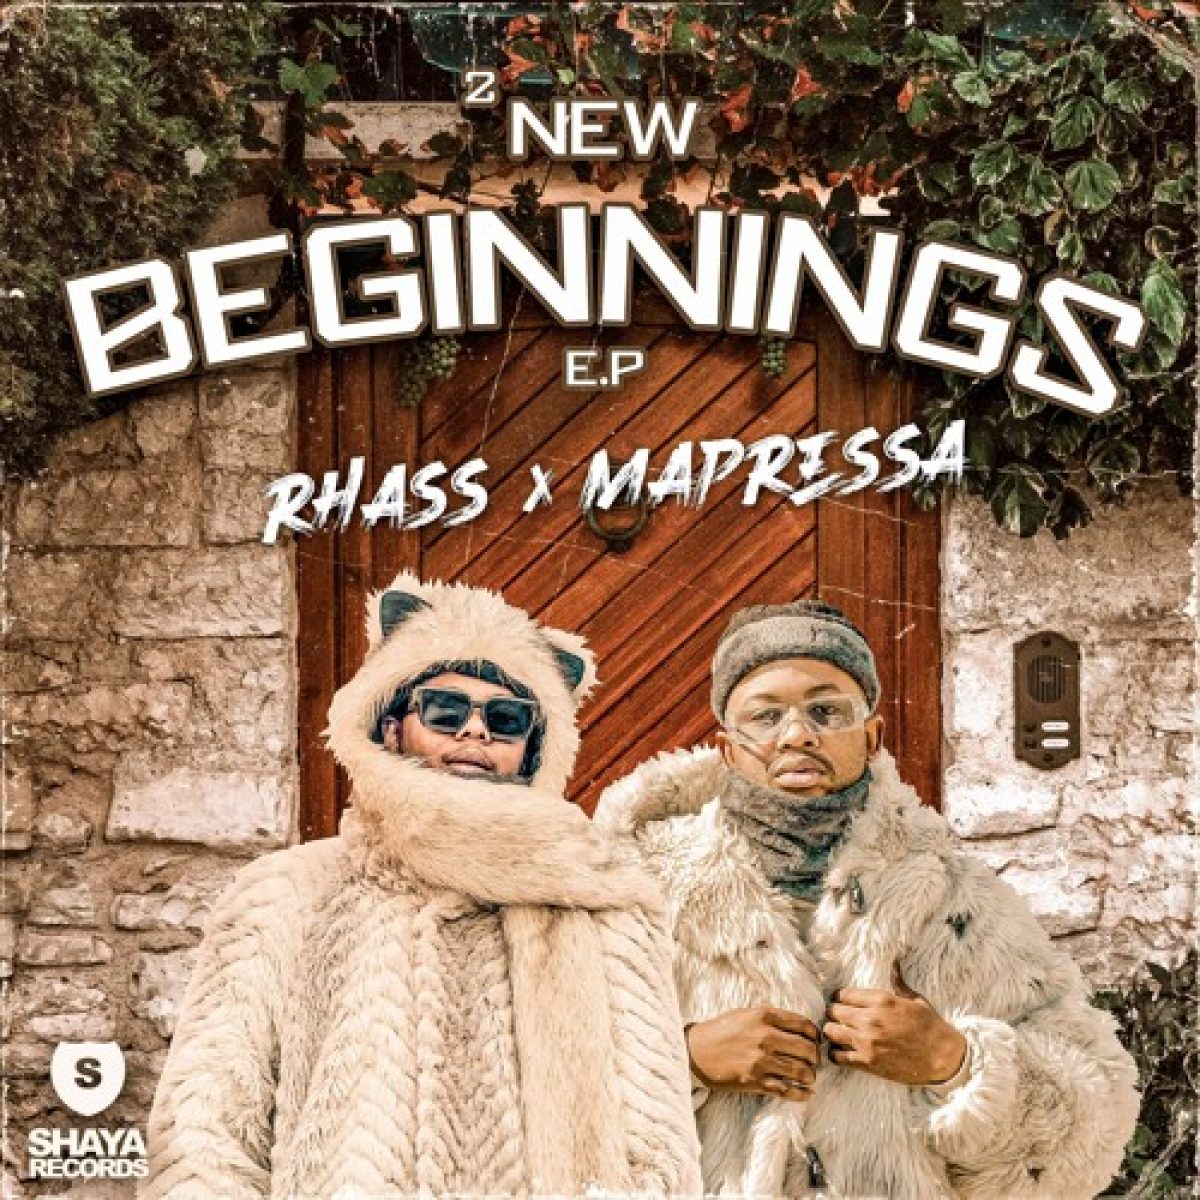 [EP] Rhass & Mapressa – 2 New Beginnings